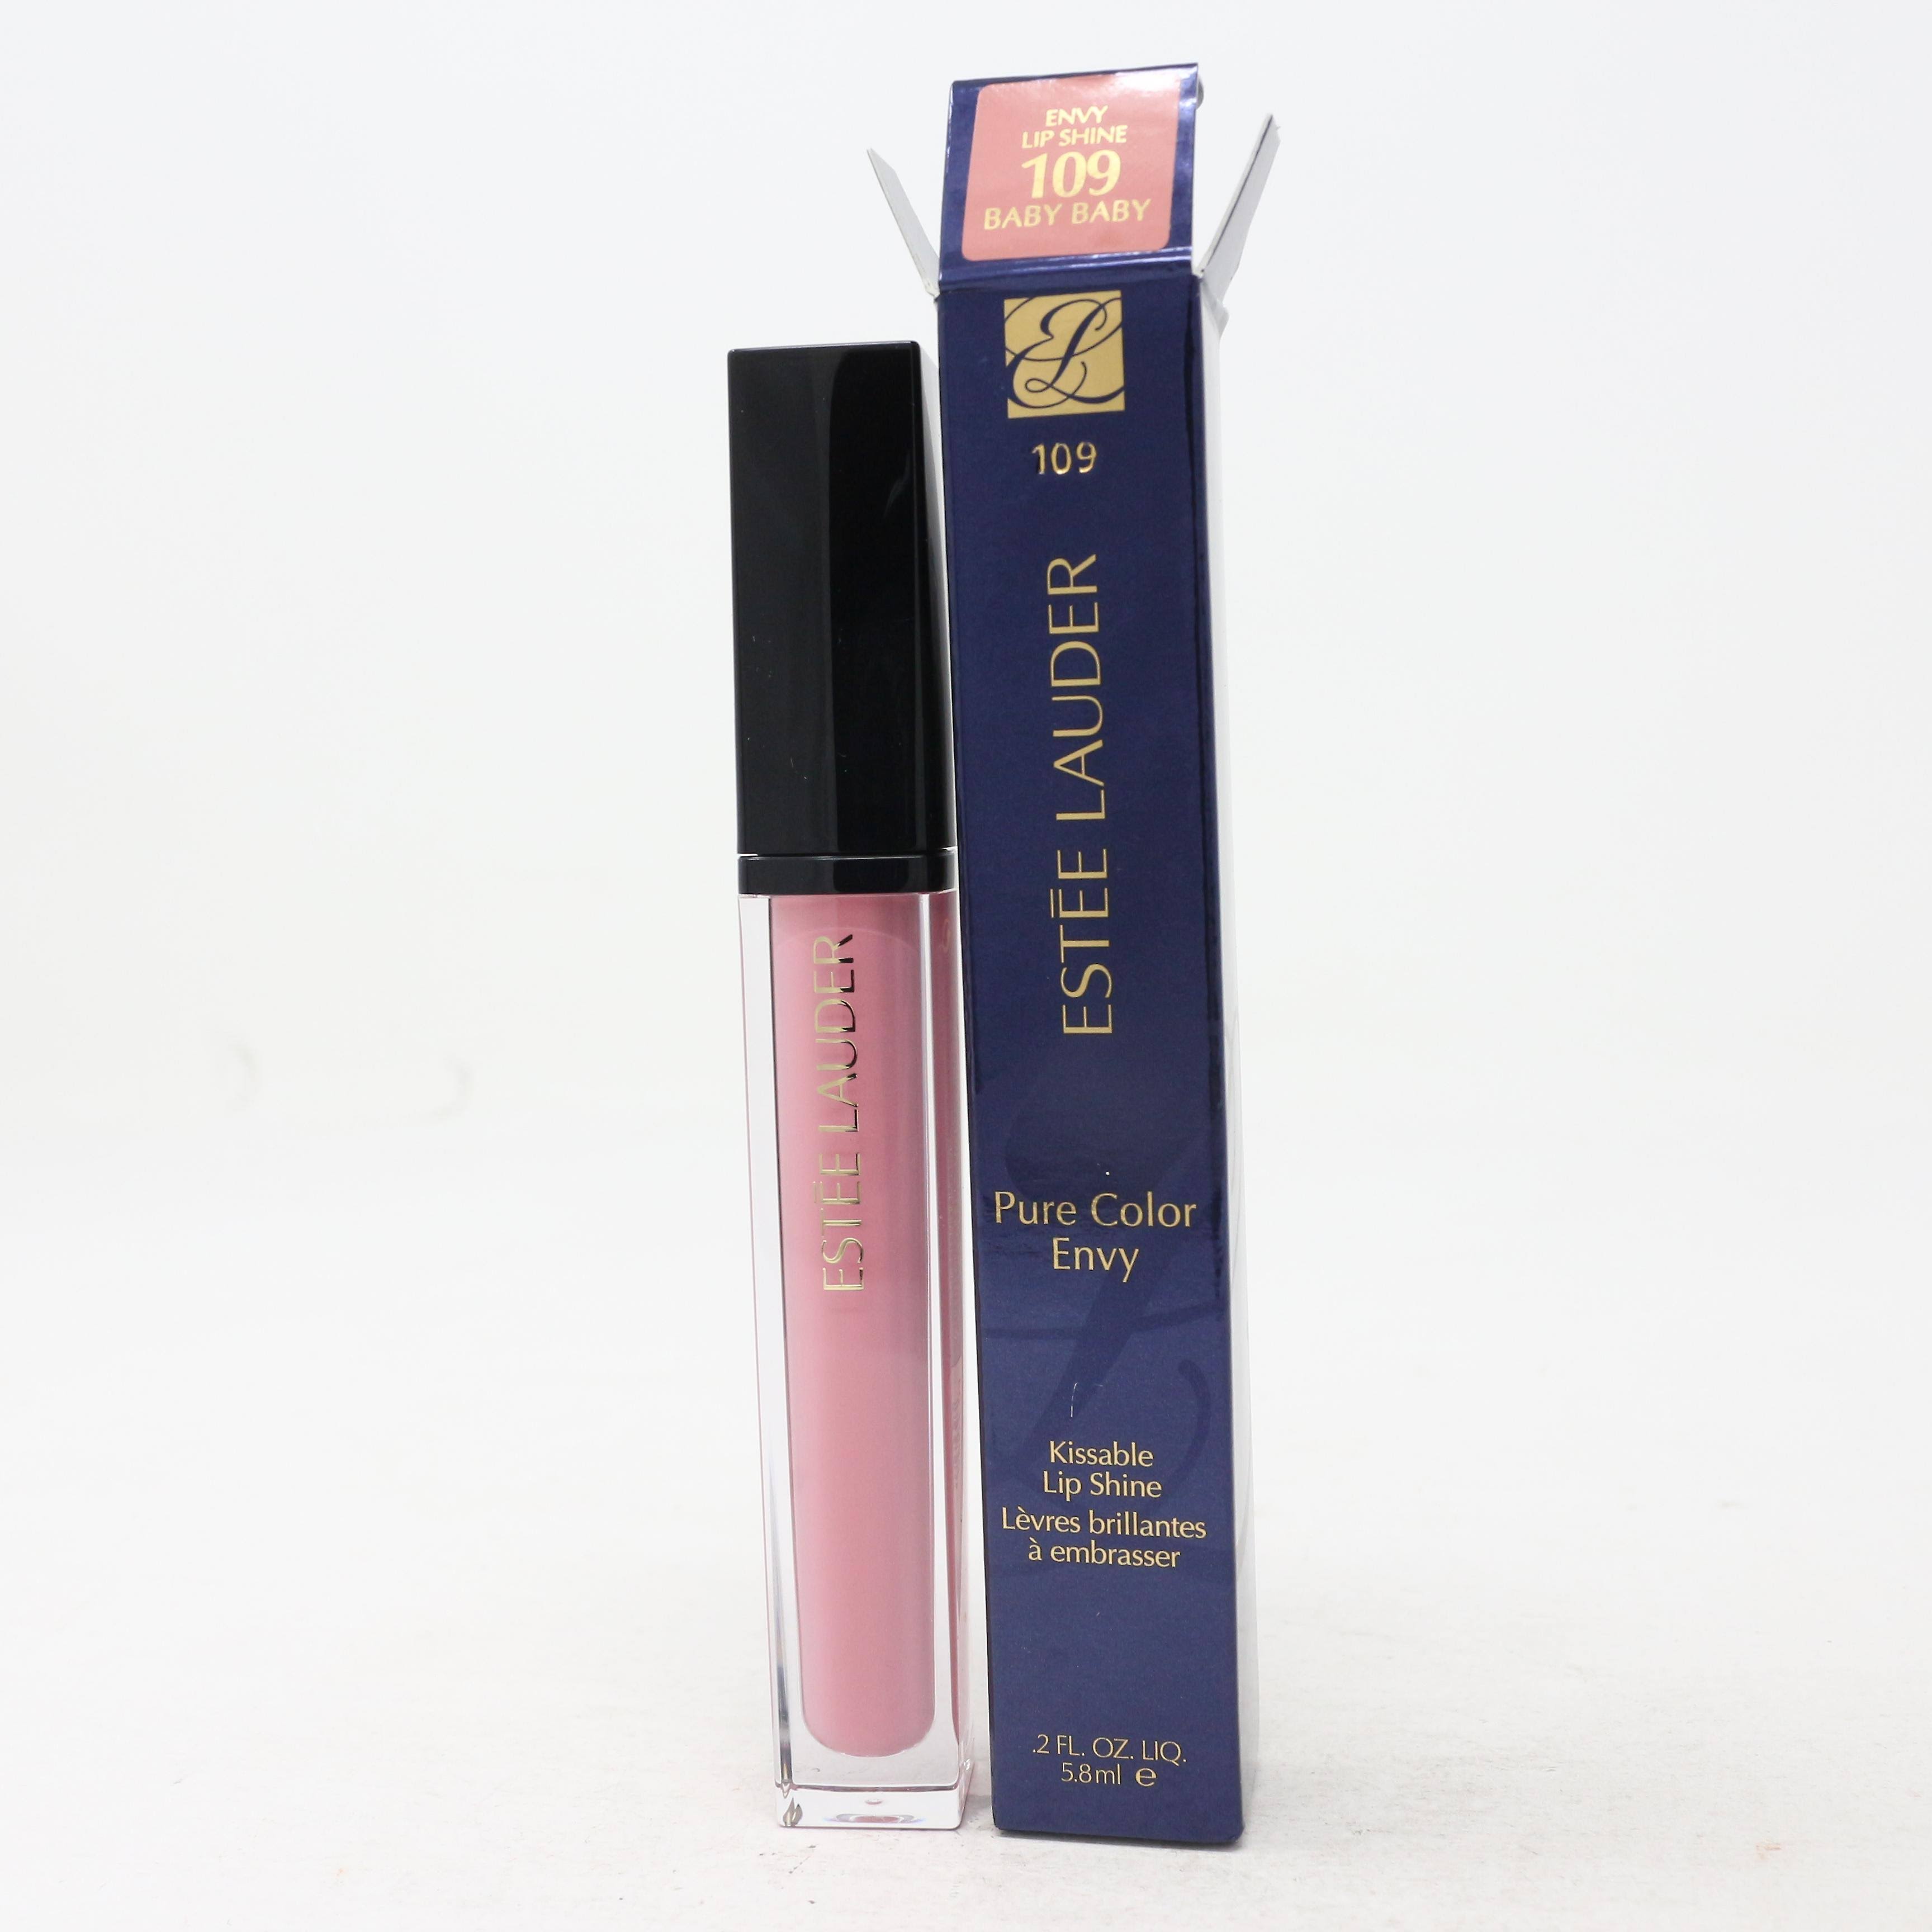 Estee Lauder Pure Color Envy Kissable Lip Shine 0.2oz/5.8ml New With Box 109 Baby Baby 0.2 oz